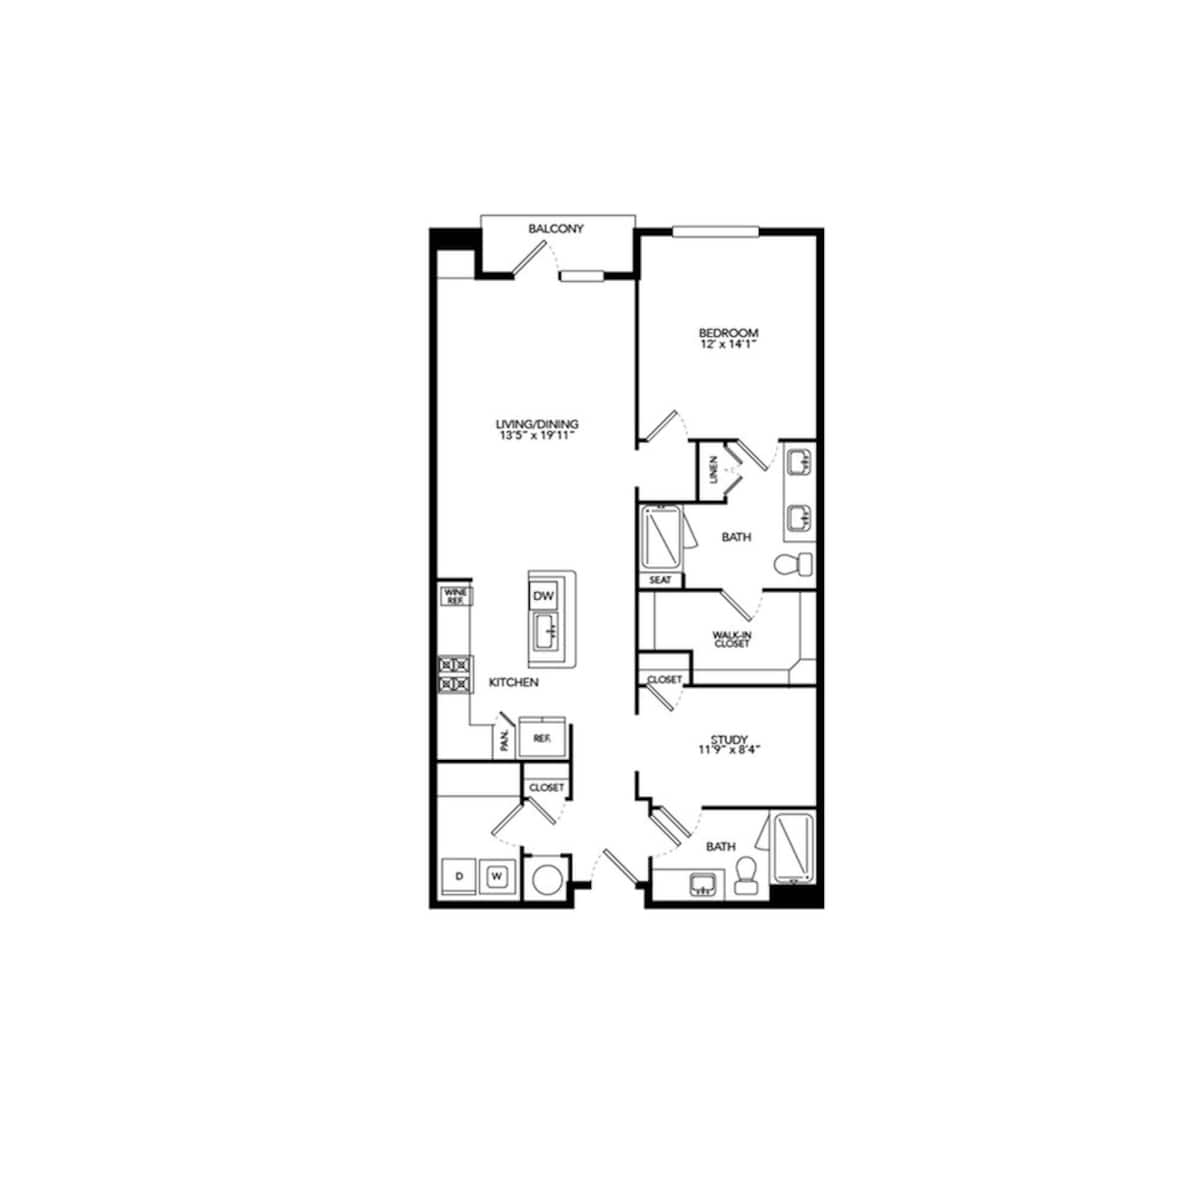 Floorplan diagram for A4, showing 1 bedroom